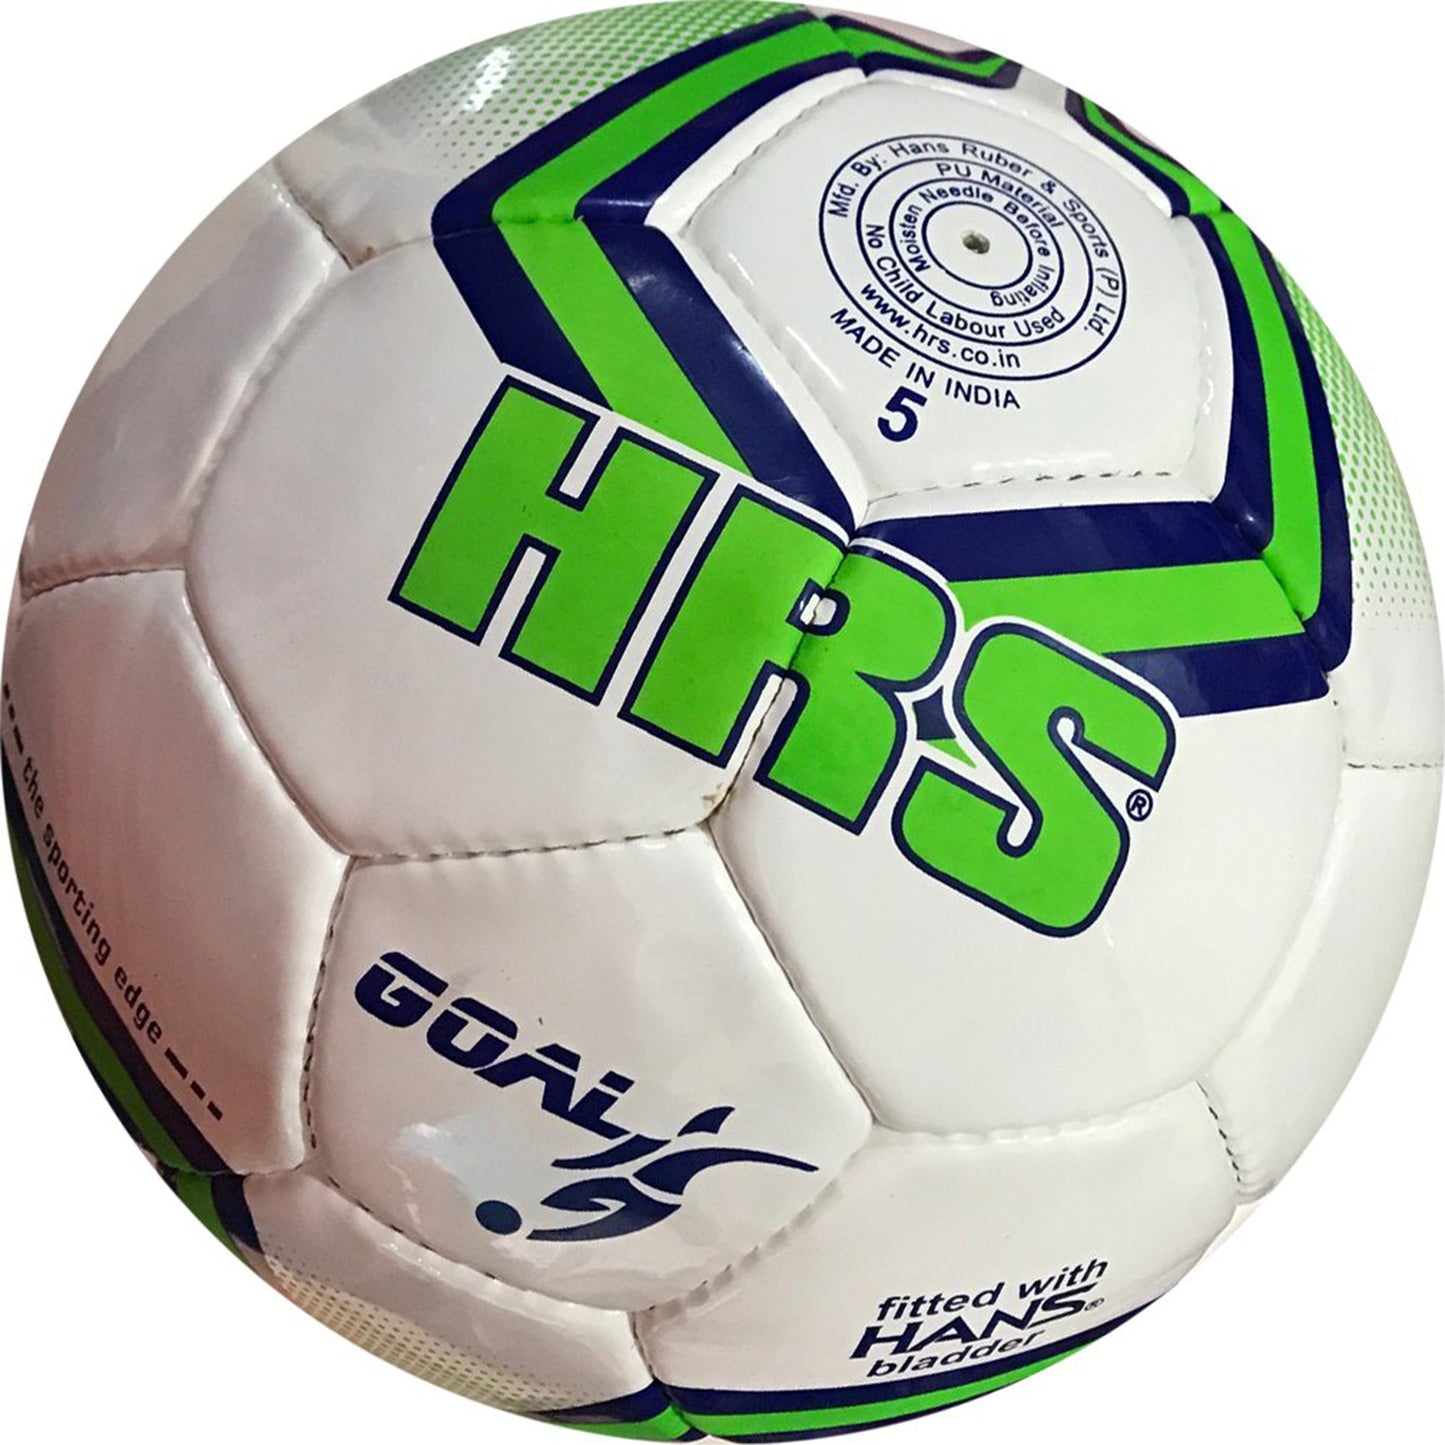 HRS Goal Imported PU Professional Match Football - Size 5 (Green/Blue) - Best Price online Prokicksports.com